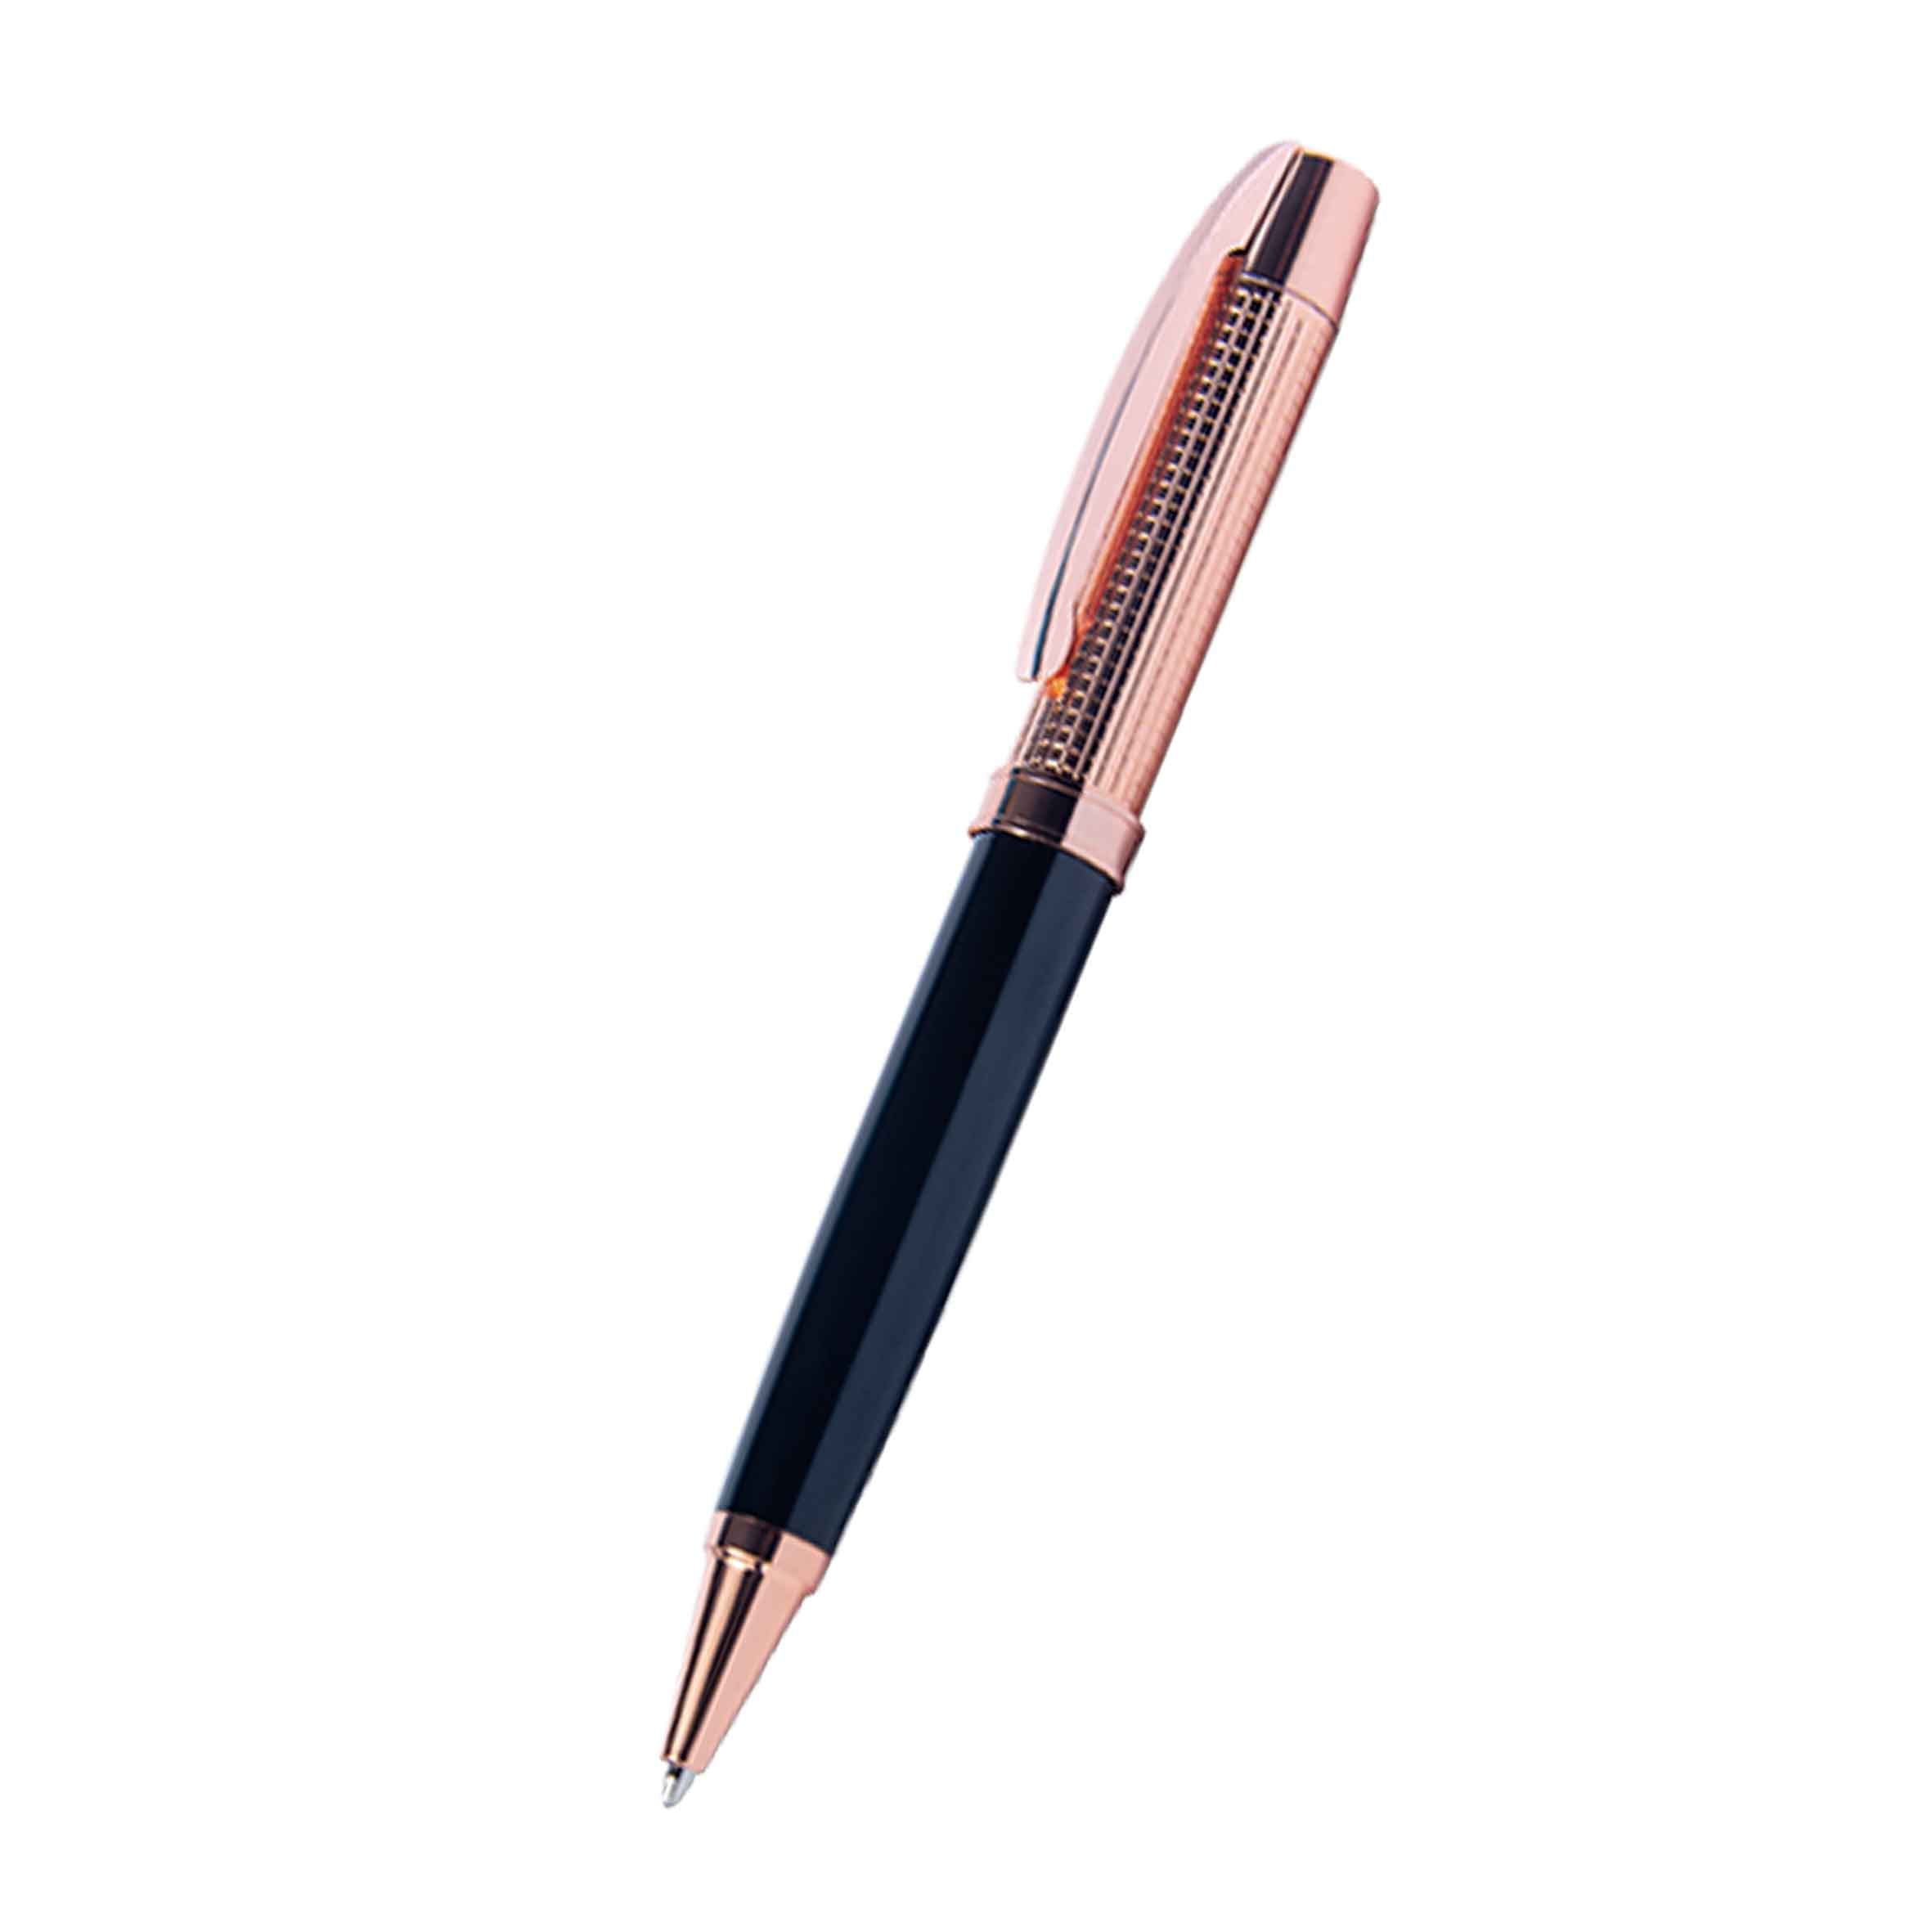 Bolígrafo Modelo Holmes Cobre + Grabado Personalizado